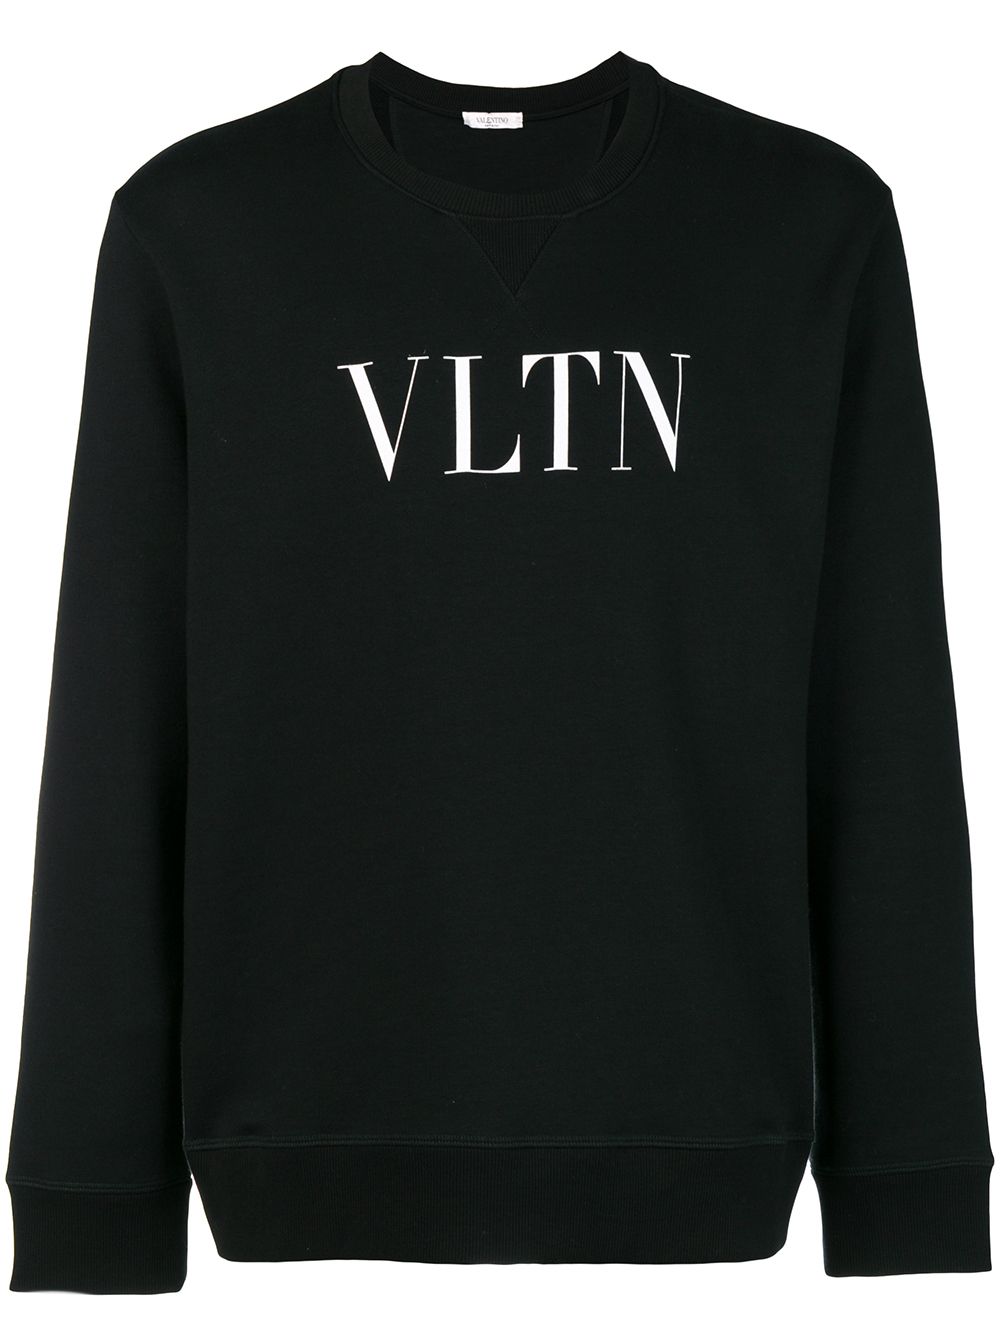 VALENTINO VLTN Print Sweatshirt - Farfetch